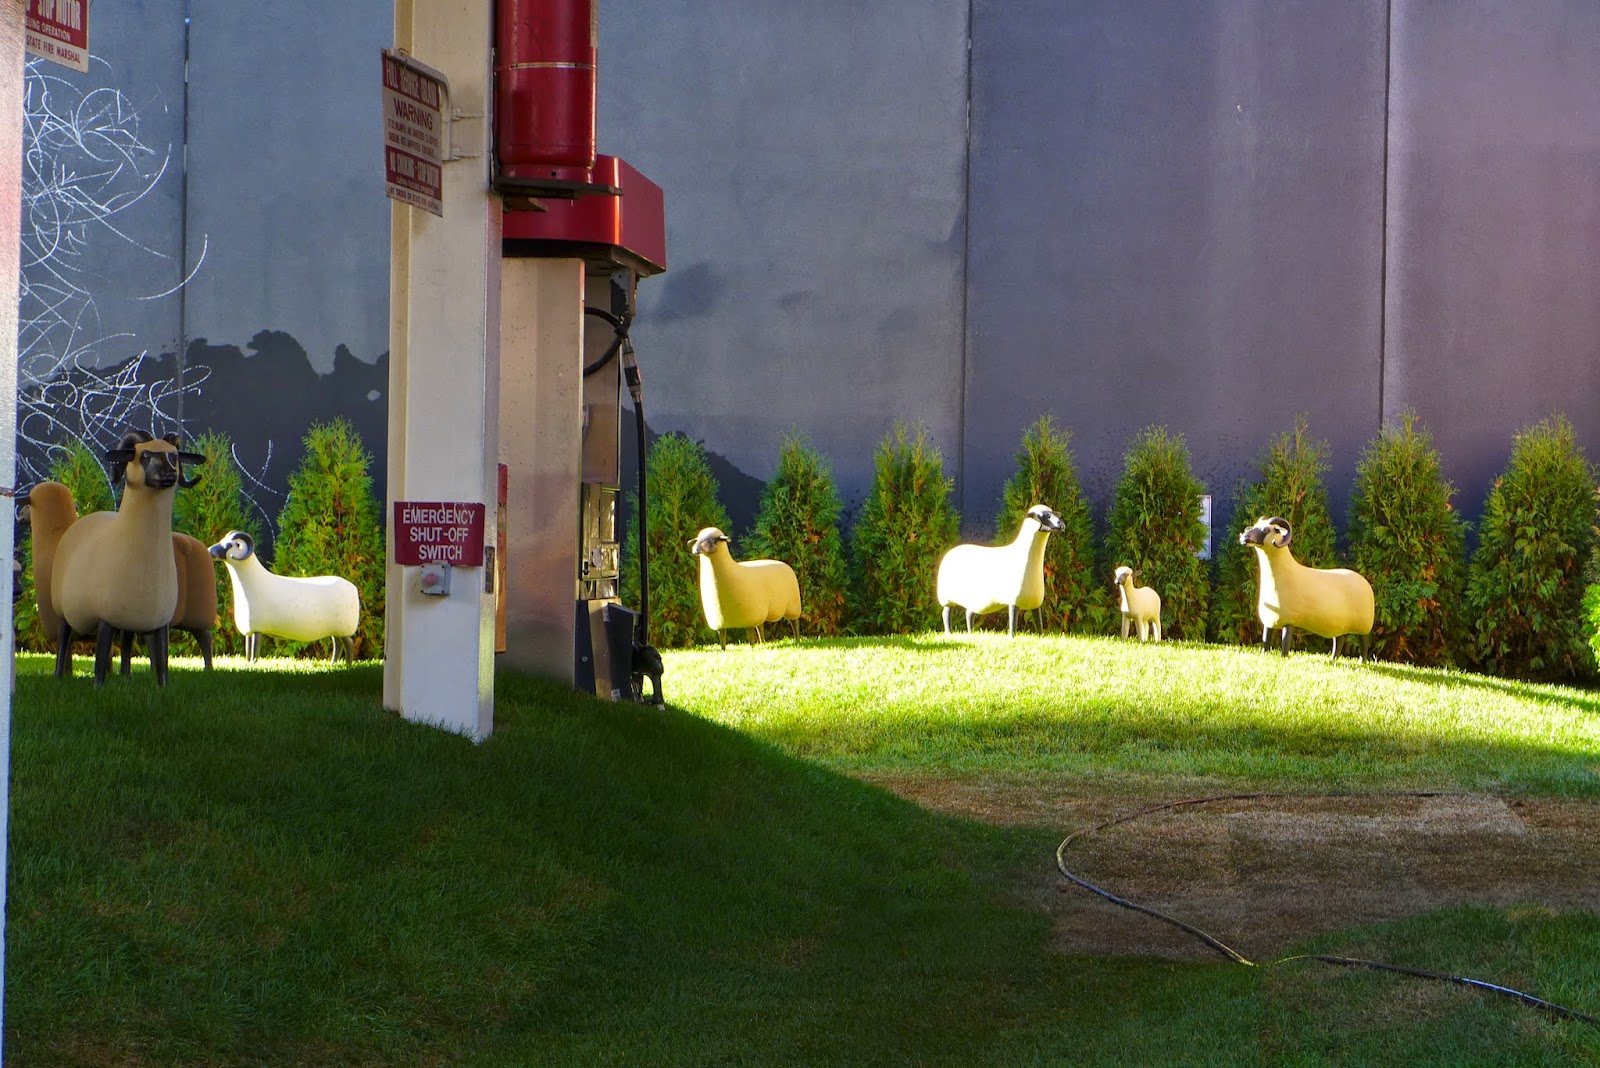 New York Chelsea area, art installation of sheep sculptures